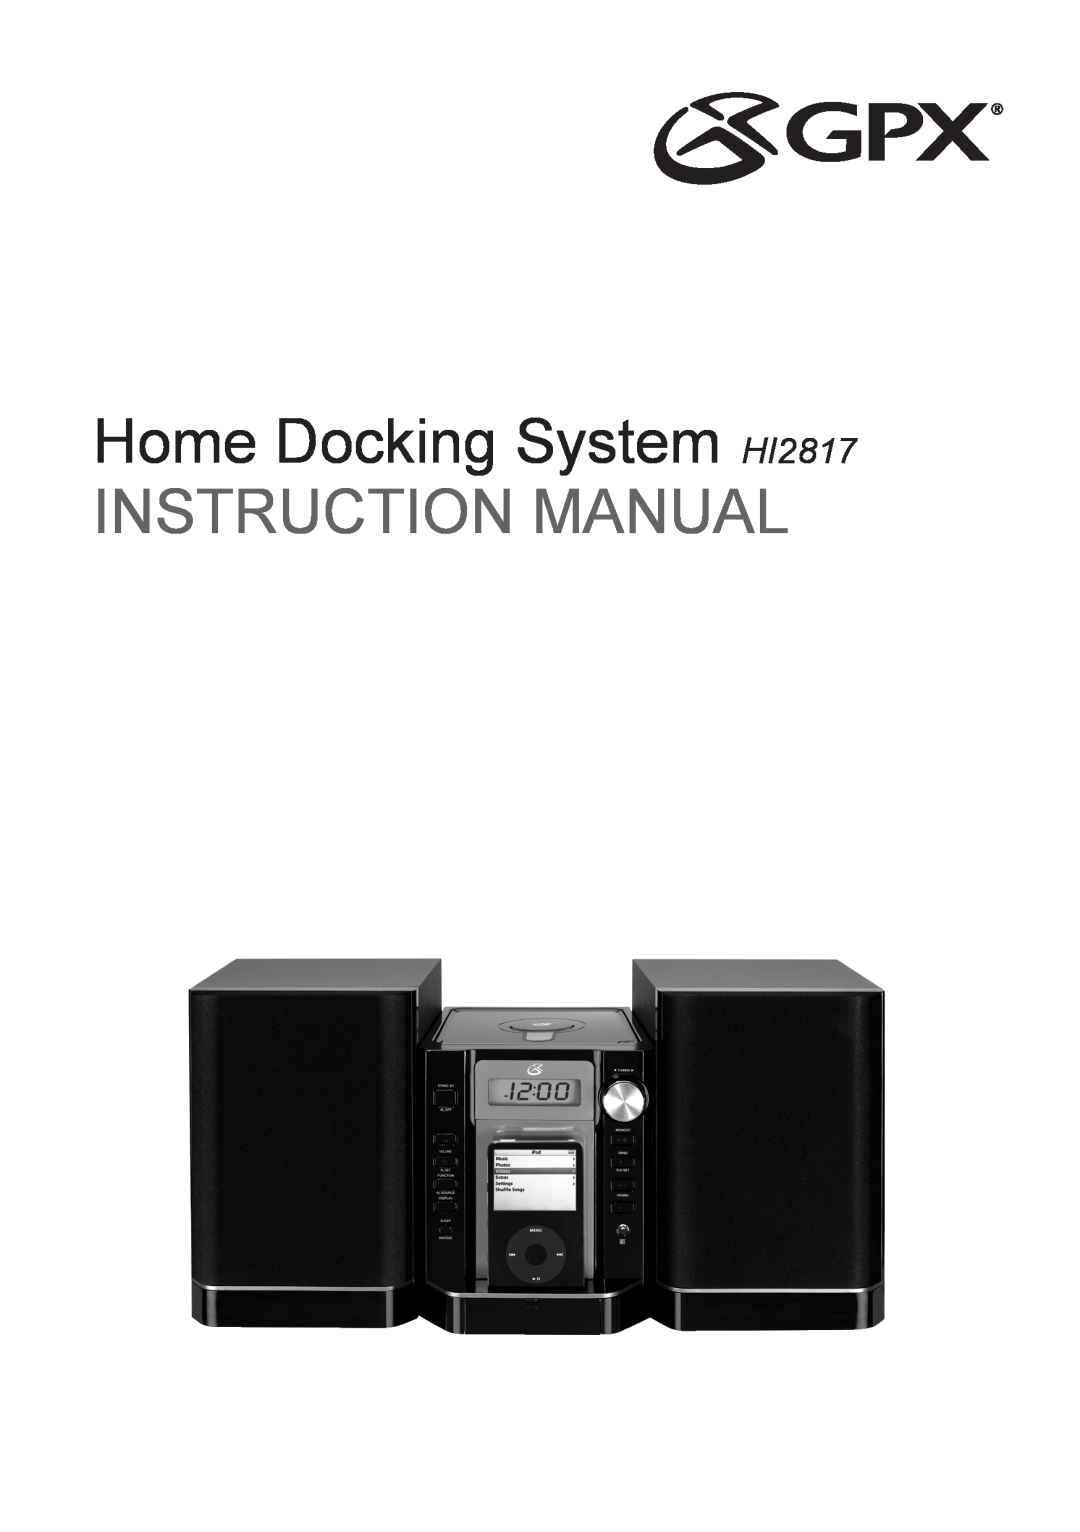 GPX instruction manual Home Docking System HI2817 